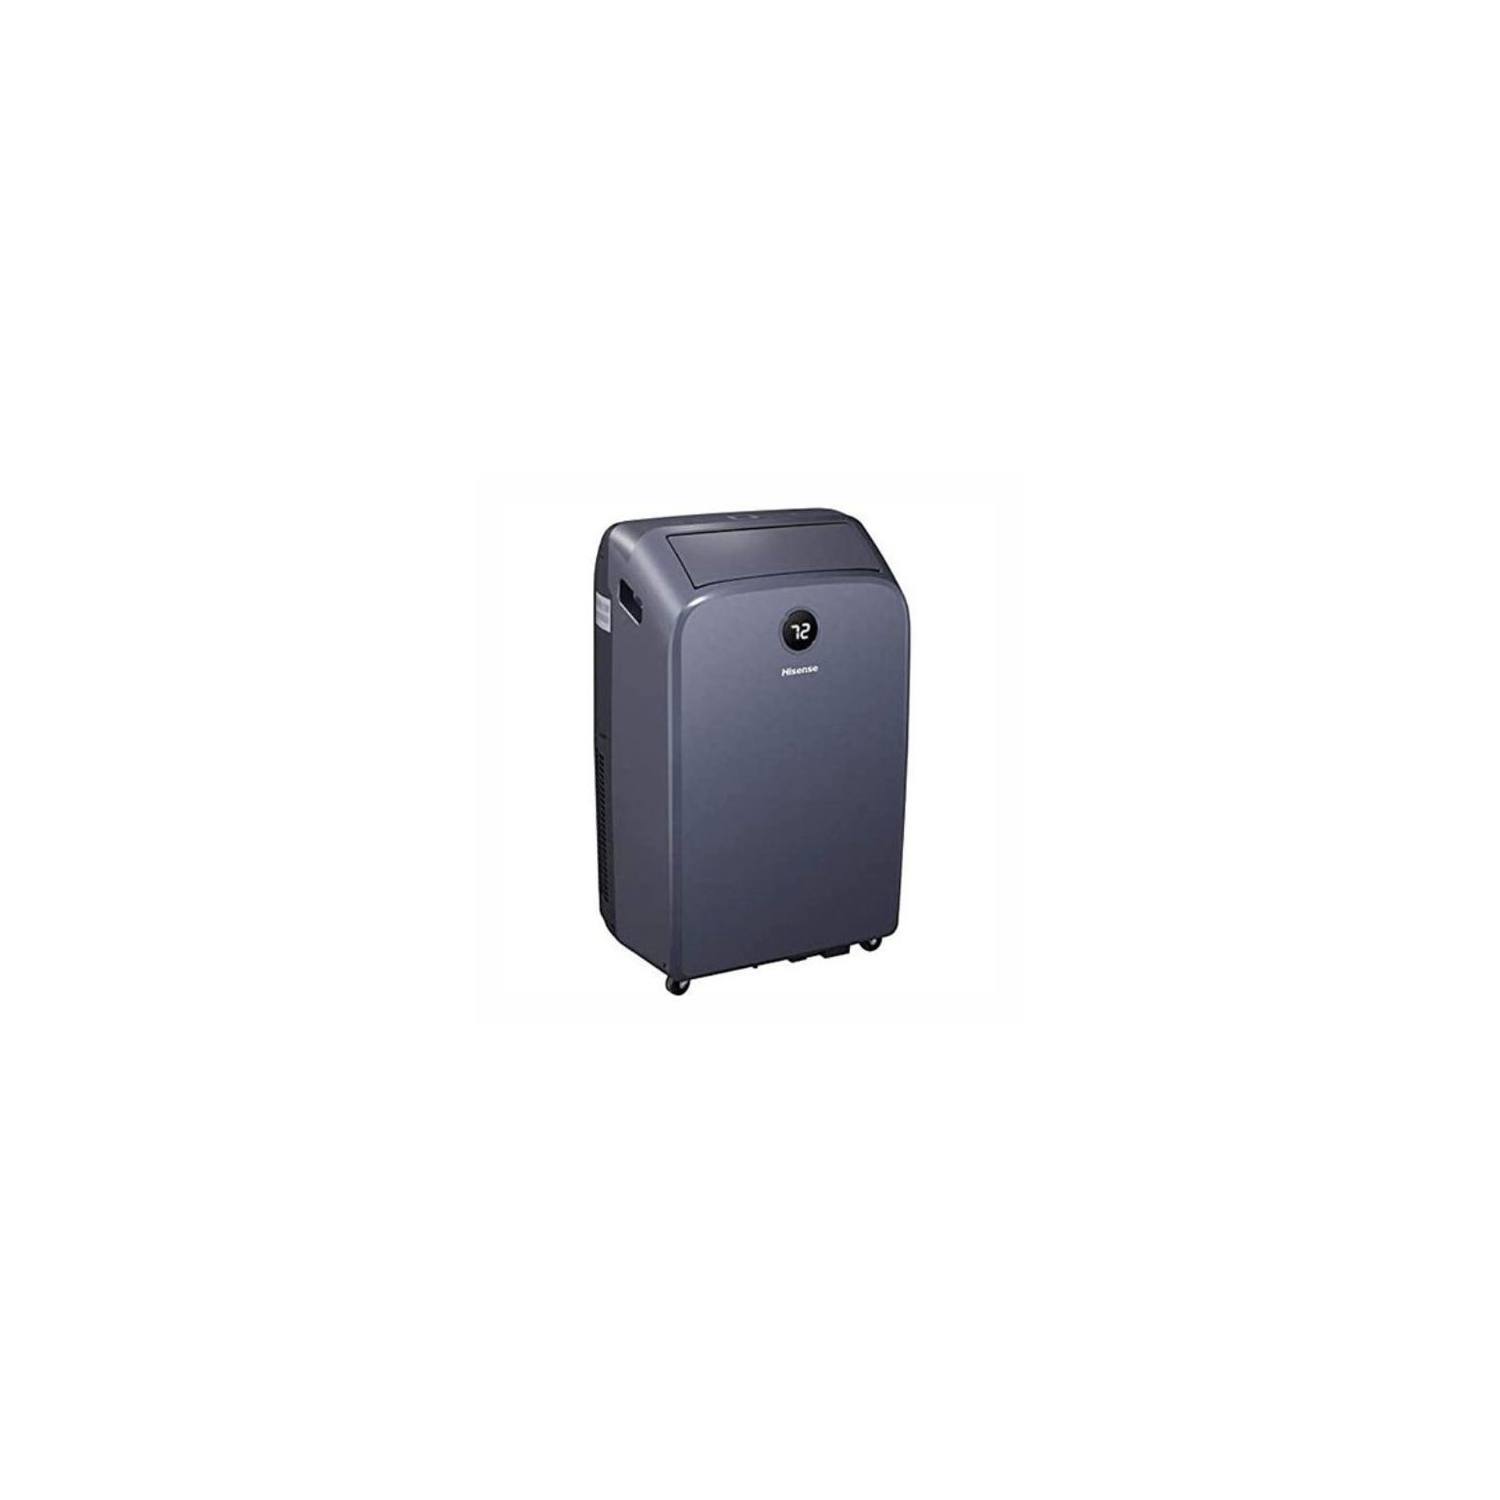 Refurbished (Excellent) - Hisense 12,500 BTU ASHRAE (7500 BTU) Portable Air Conditioner with Heater - Certified Refurbished